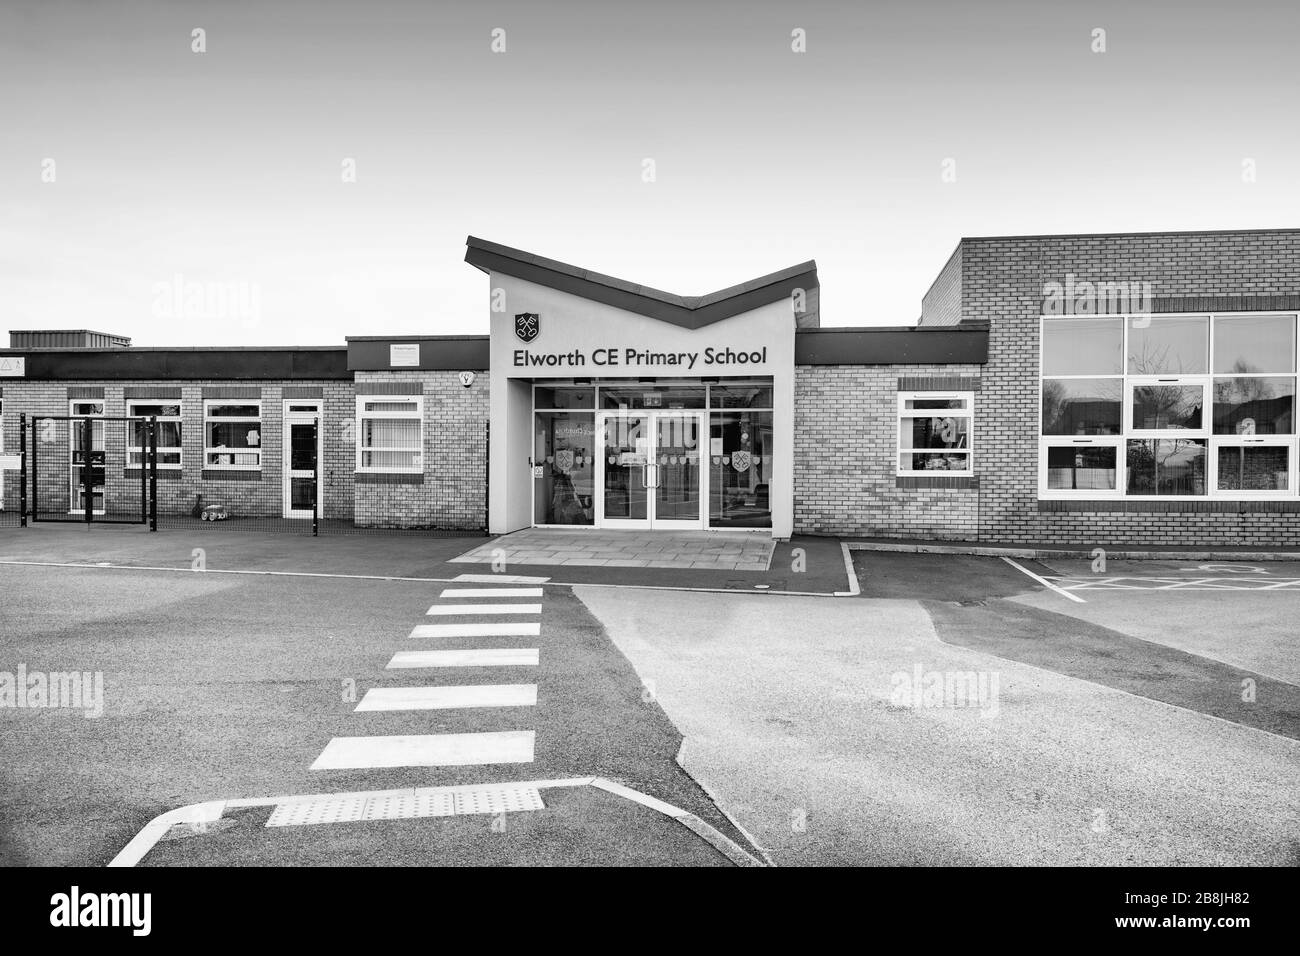 Elworth CE Primary School in Black and White,Cheshire UK Stock Photo